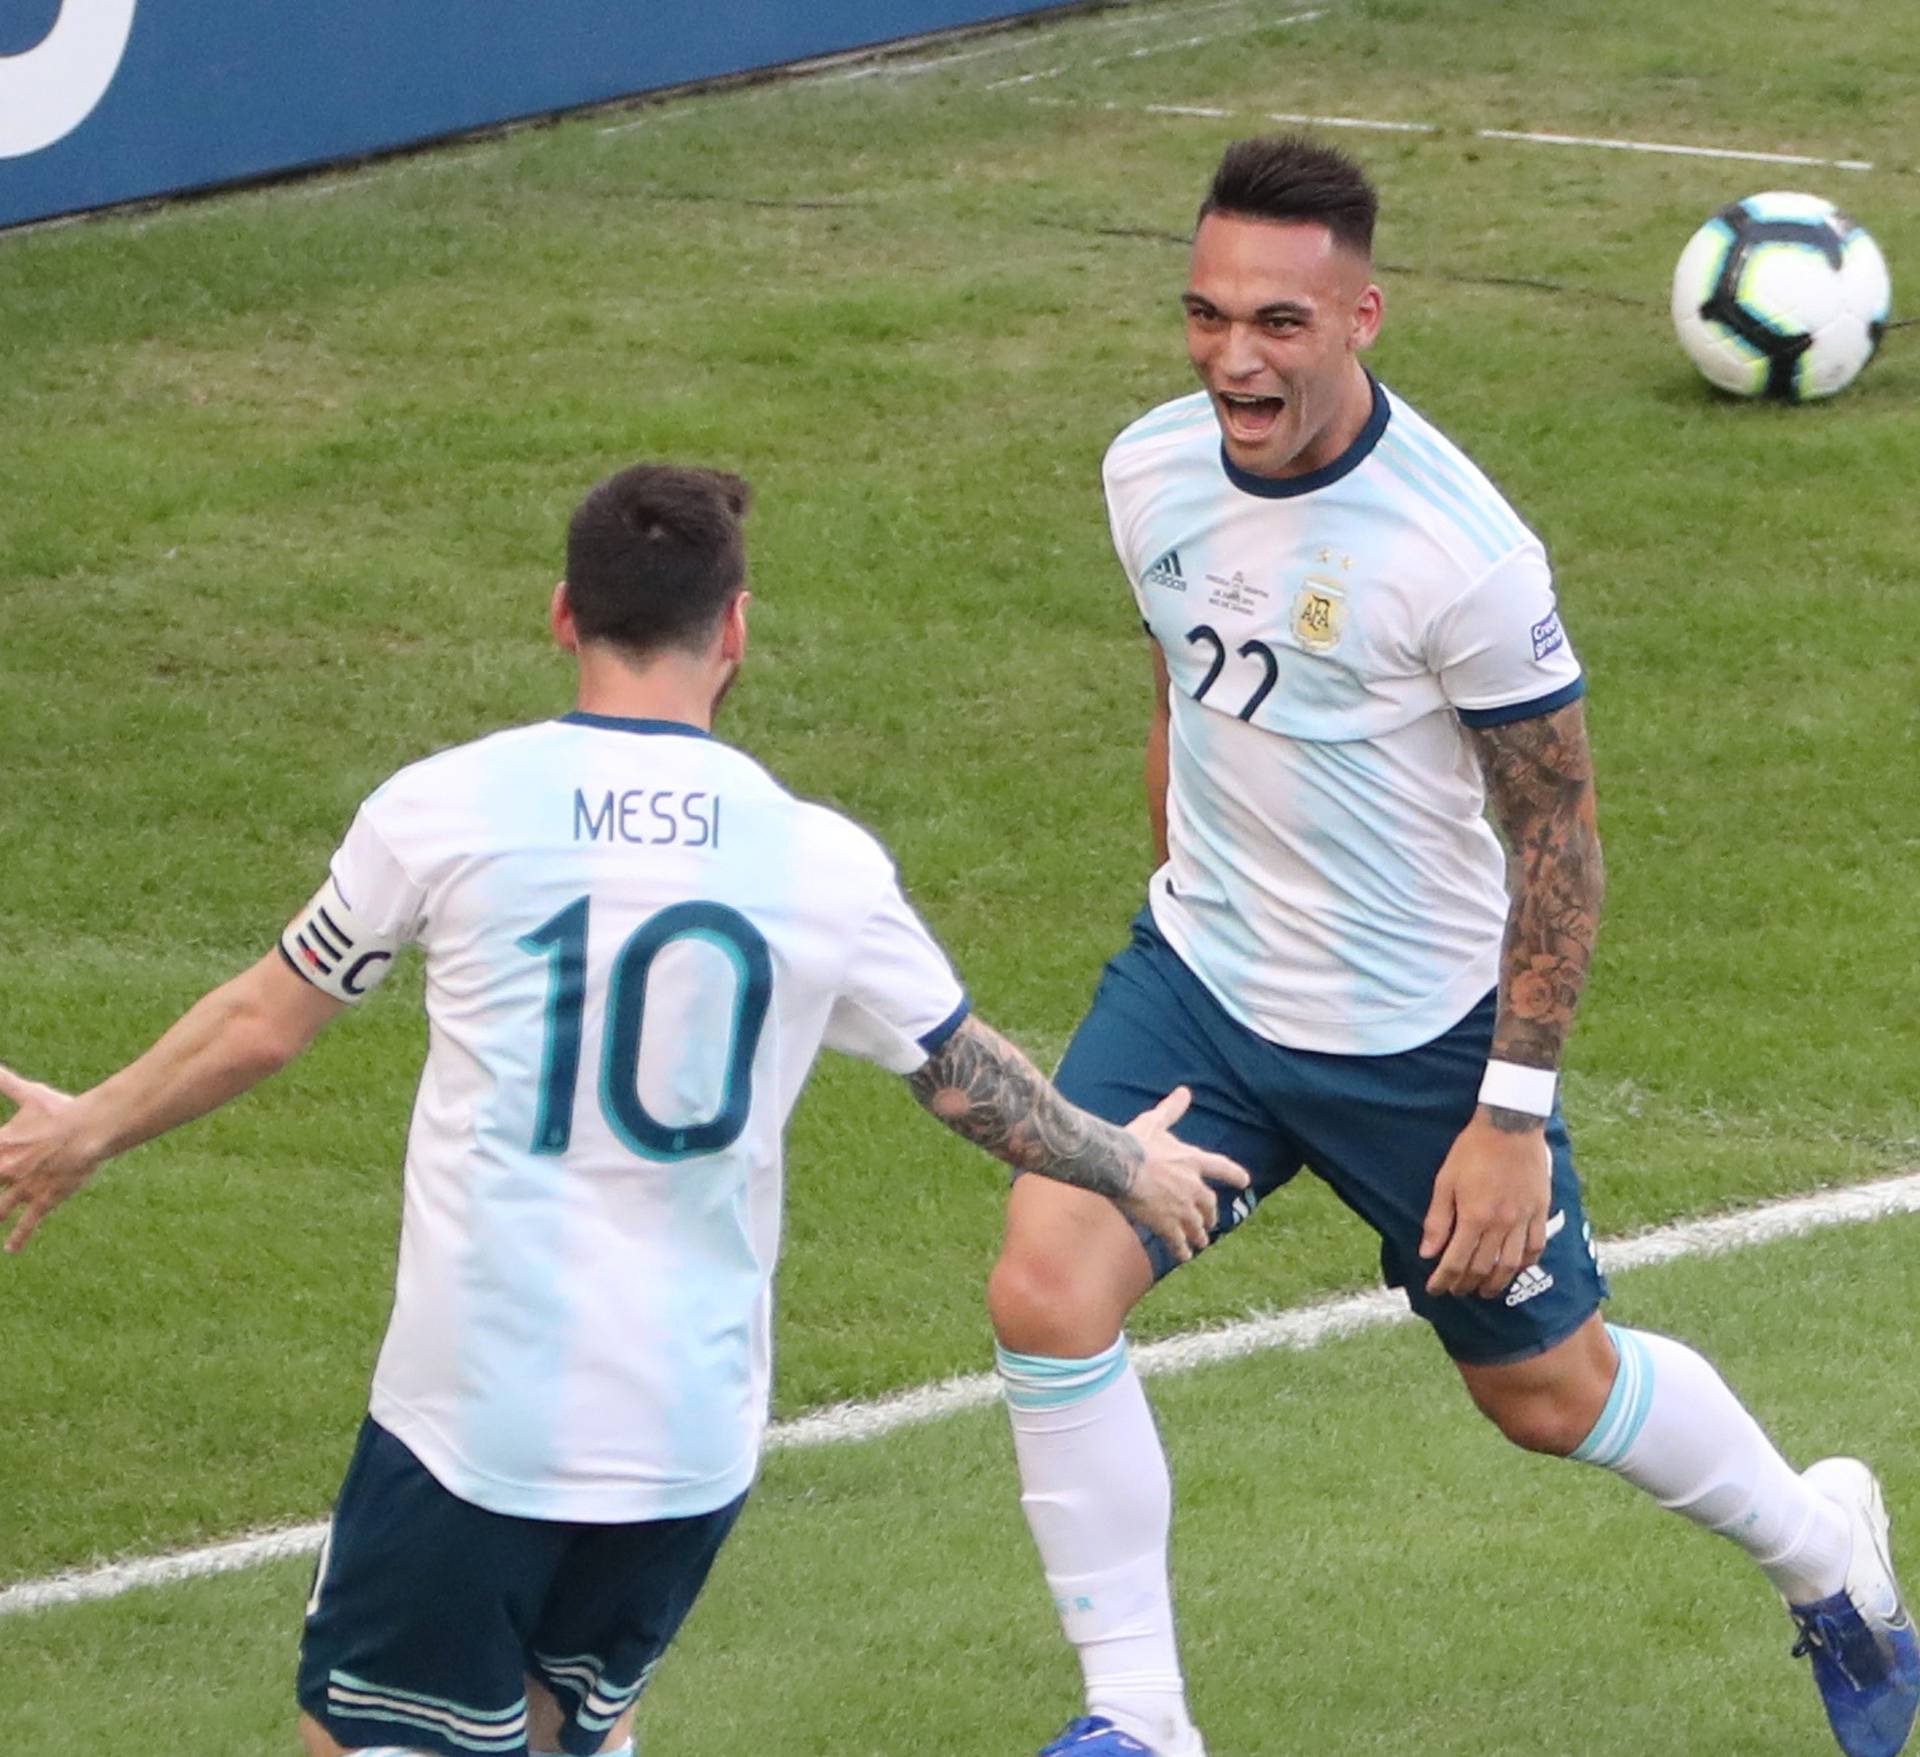 Copa America Brazil 2019 - Quarter Final - Venezuela v Argentina